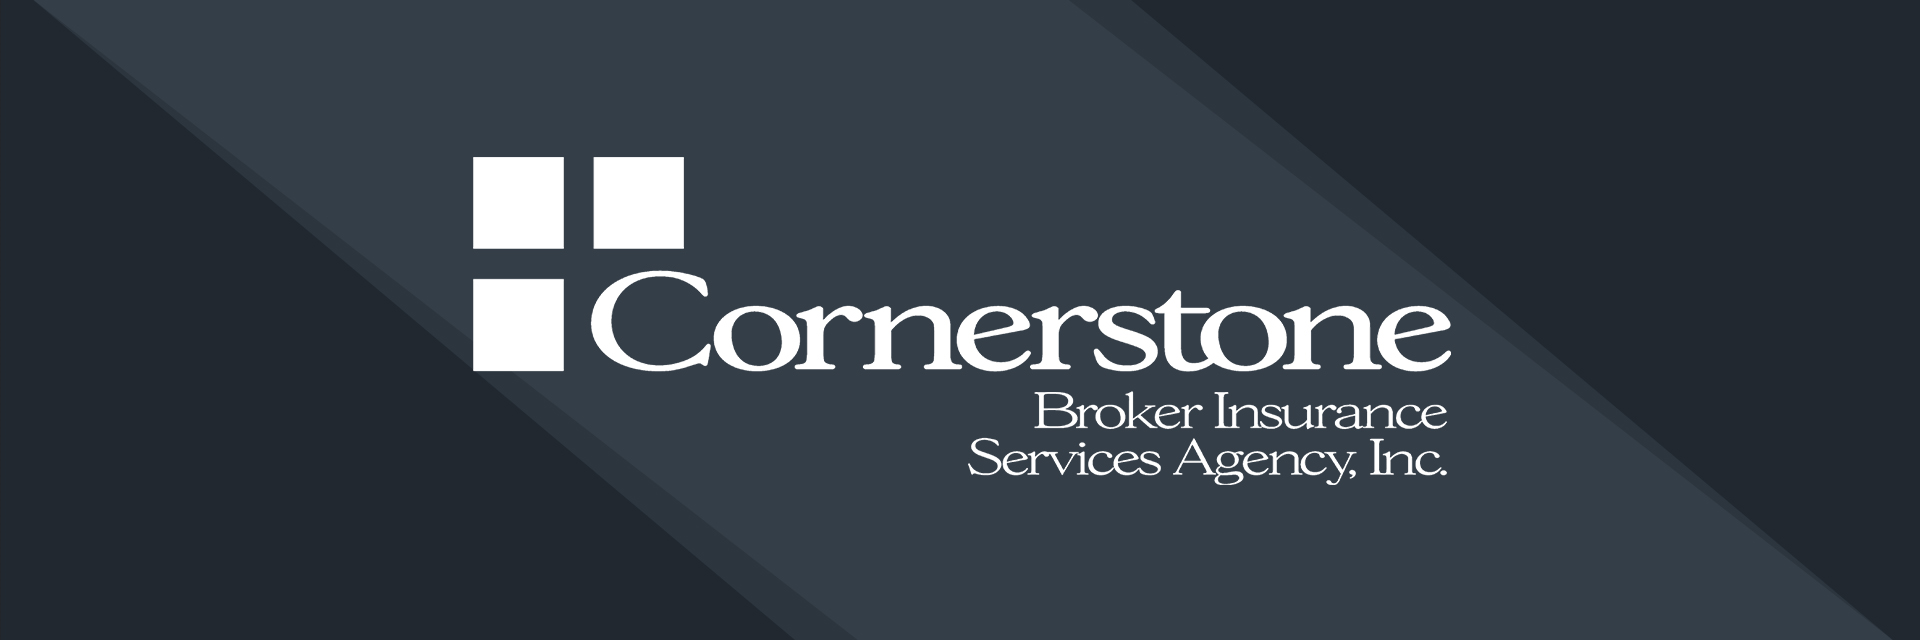 Cornerstone Broker Insurance Services Agency Profile